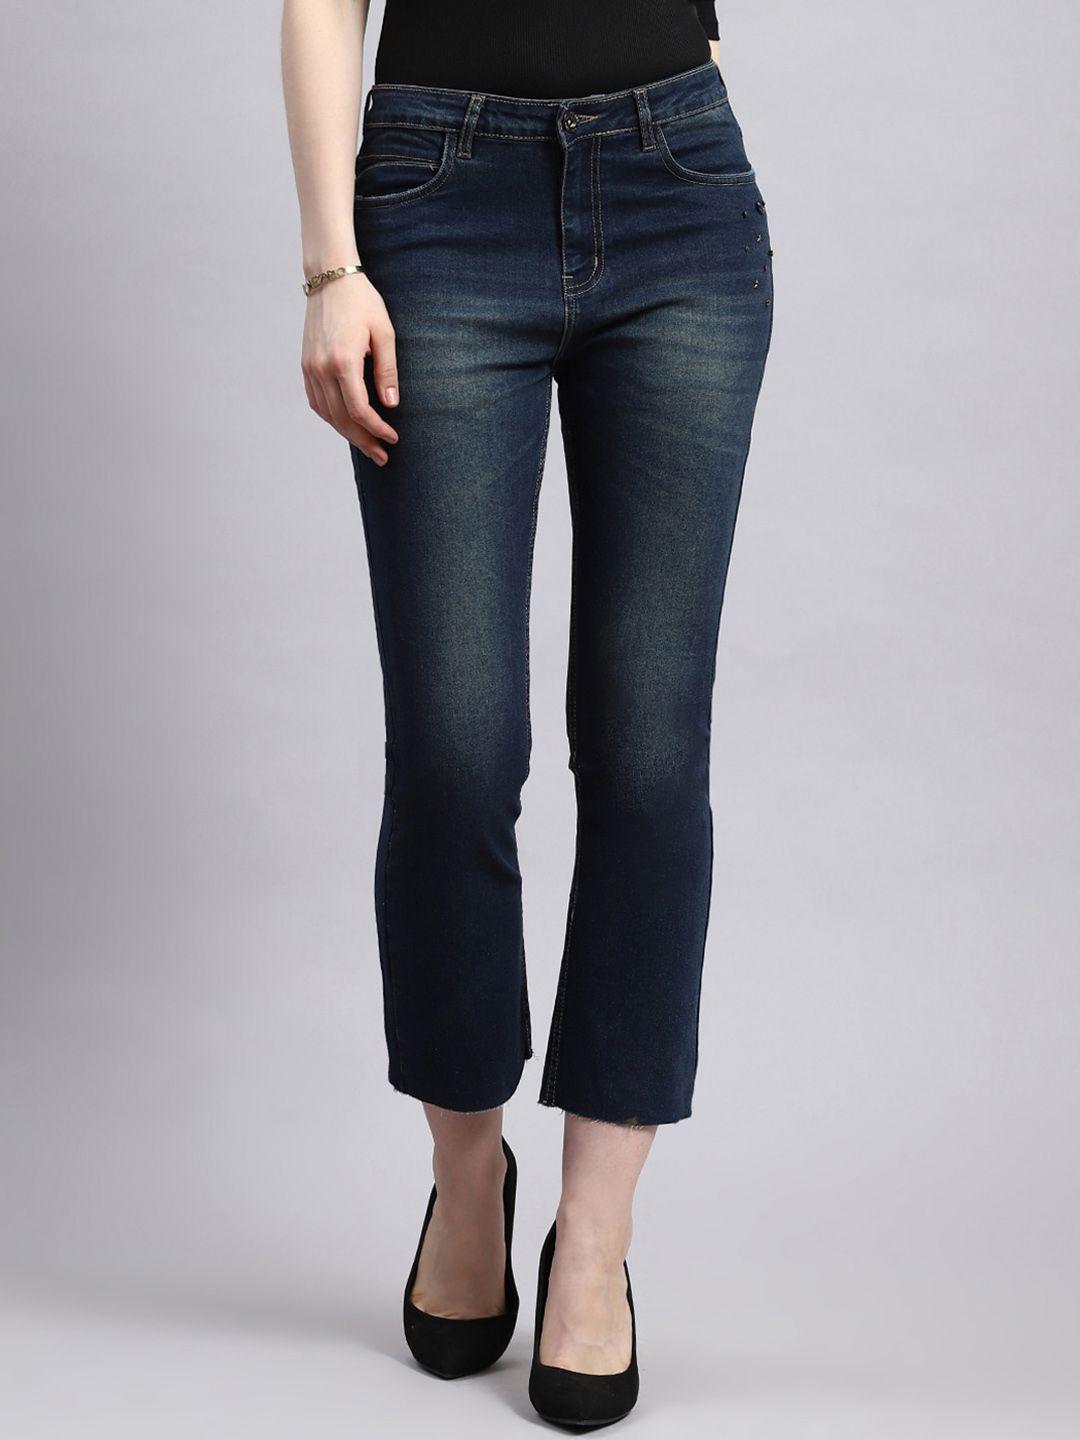 monte carlo women smart mid-rise light fade jeans